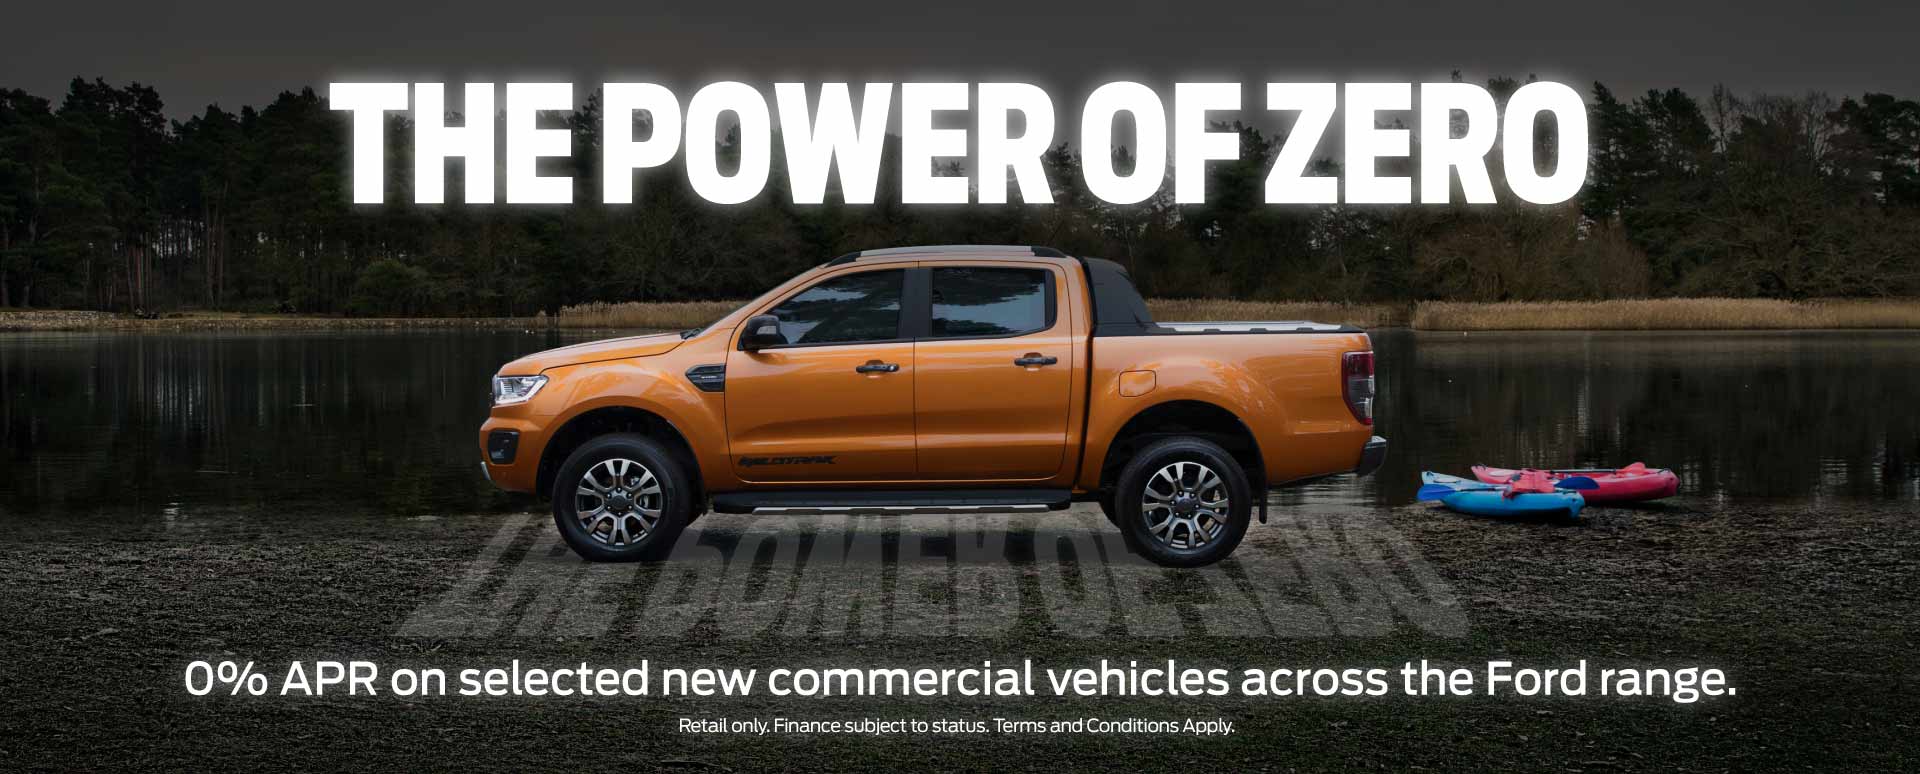 Ford CV Power Of Zero